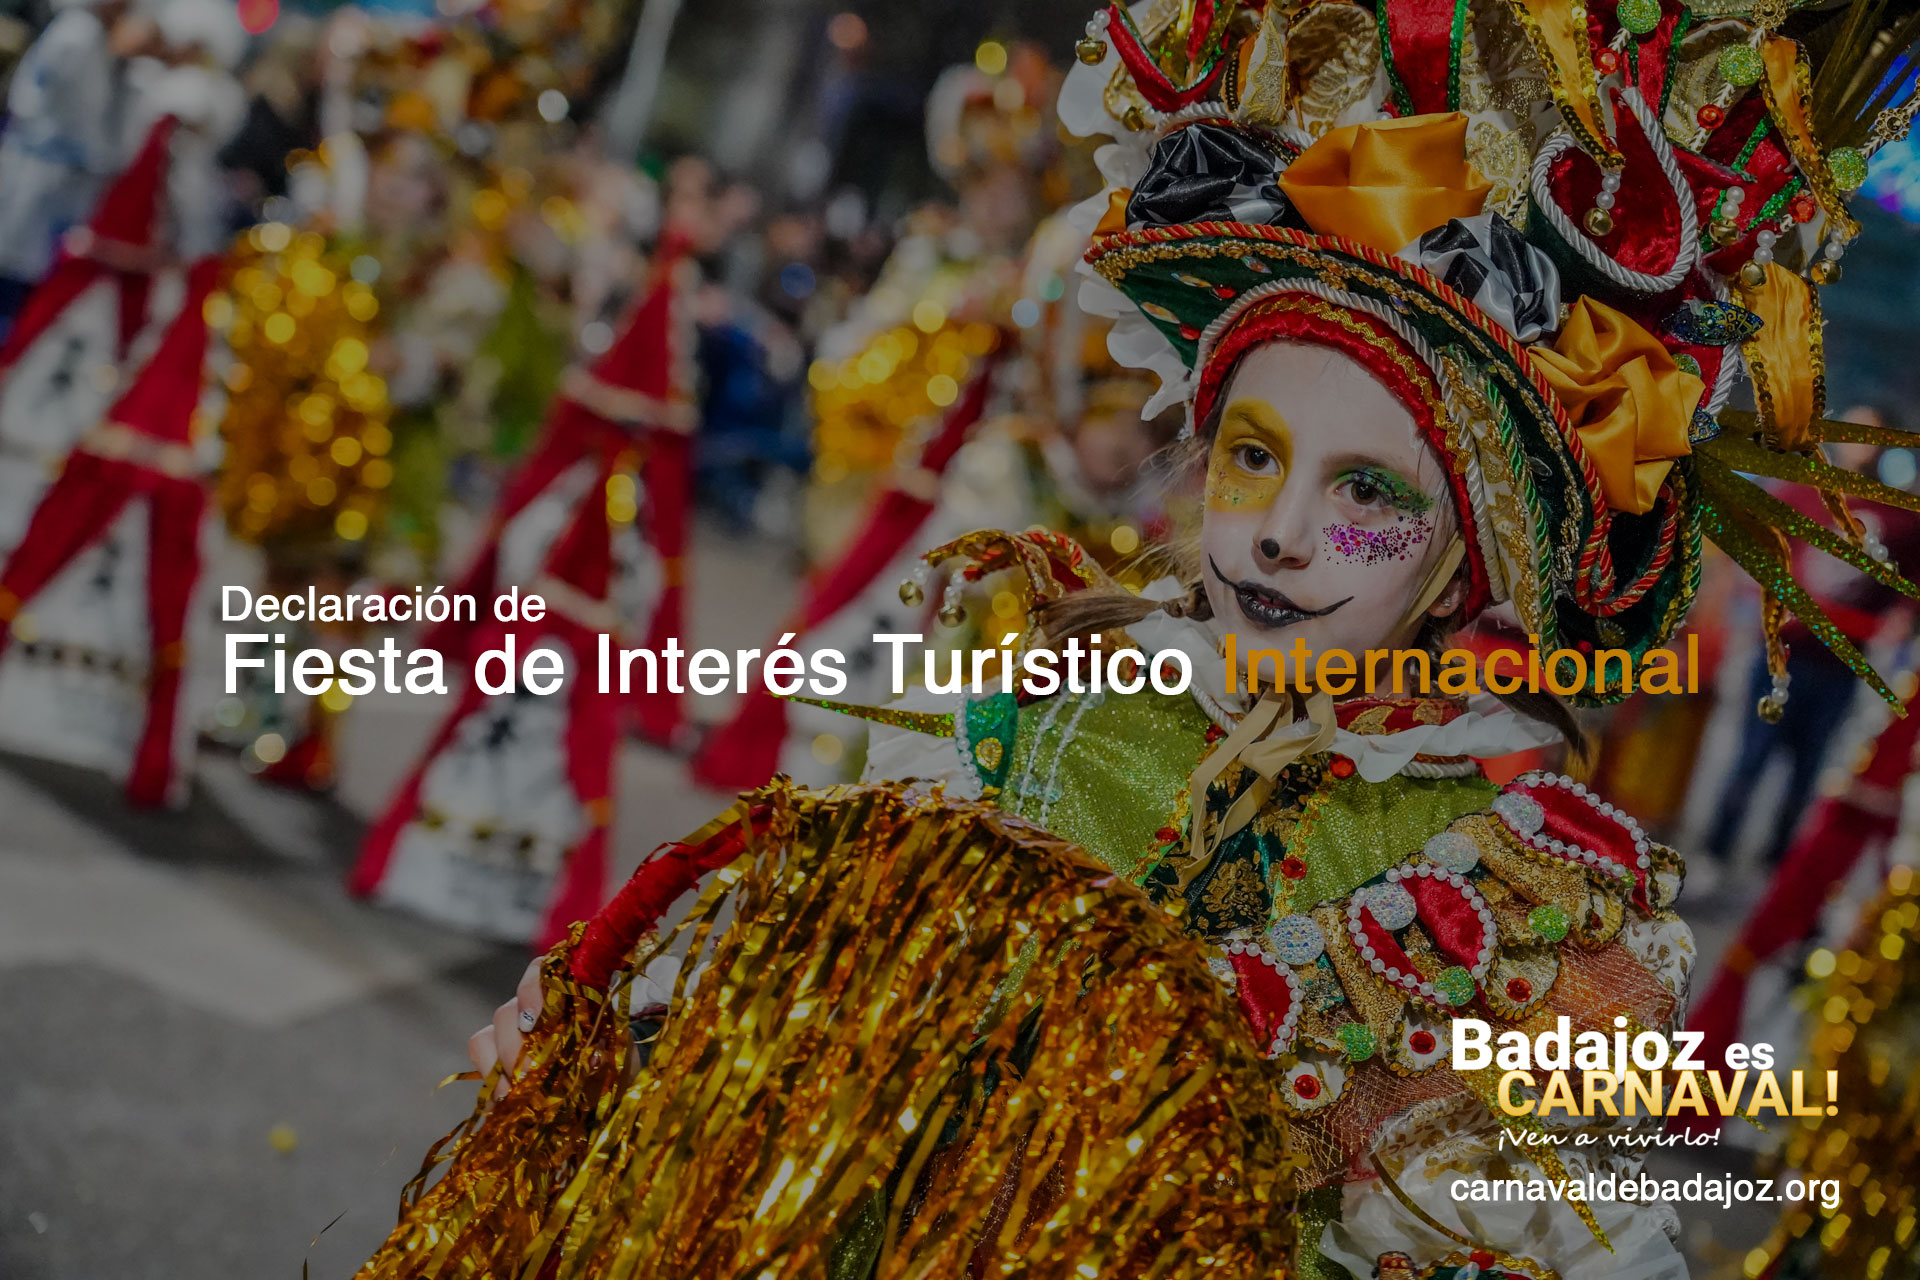 Badajoz Carnival has been declared a Festival of International Tourist Interest